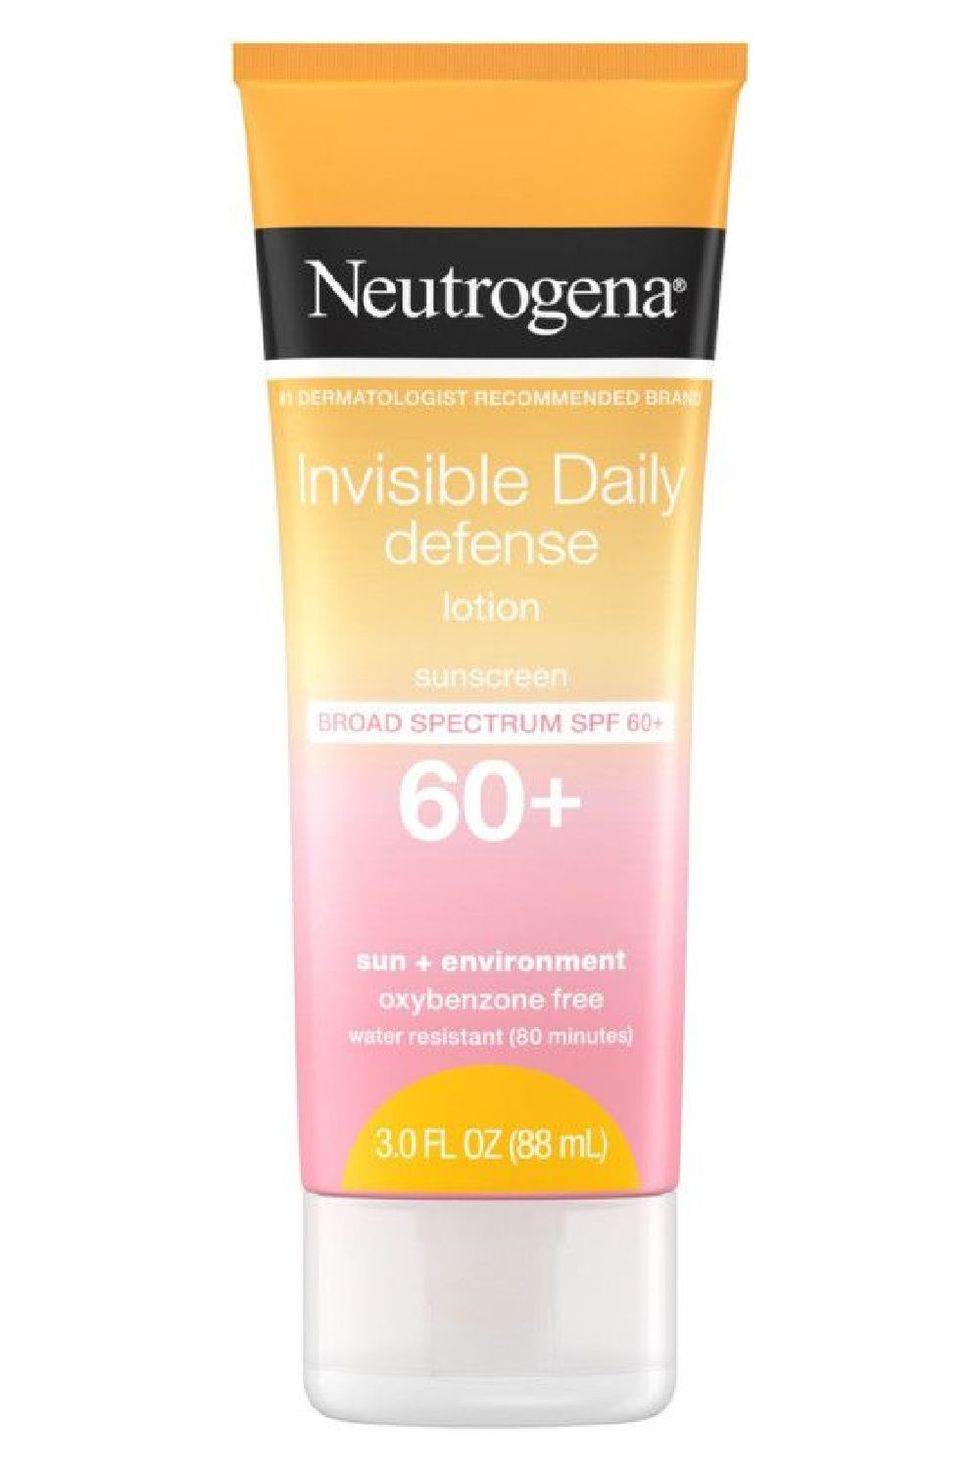 Neutrogena Invisible Daily Defense Lotion SPF 60+